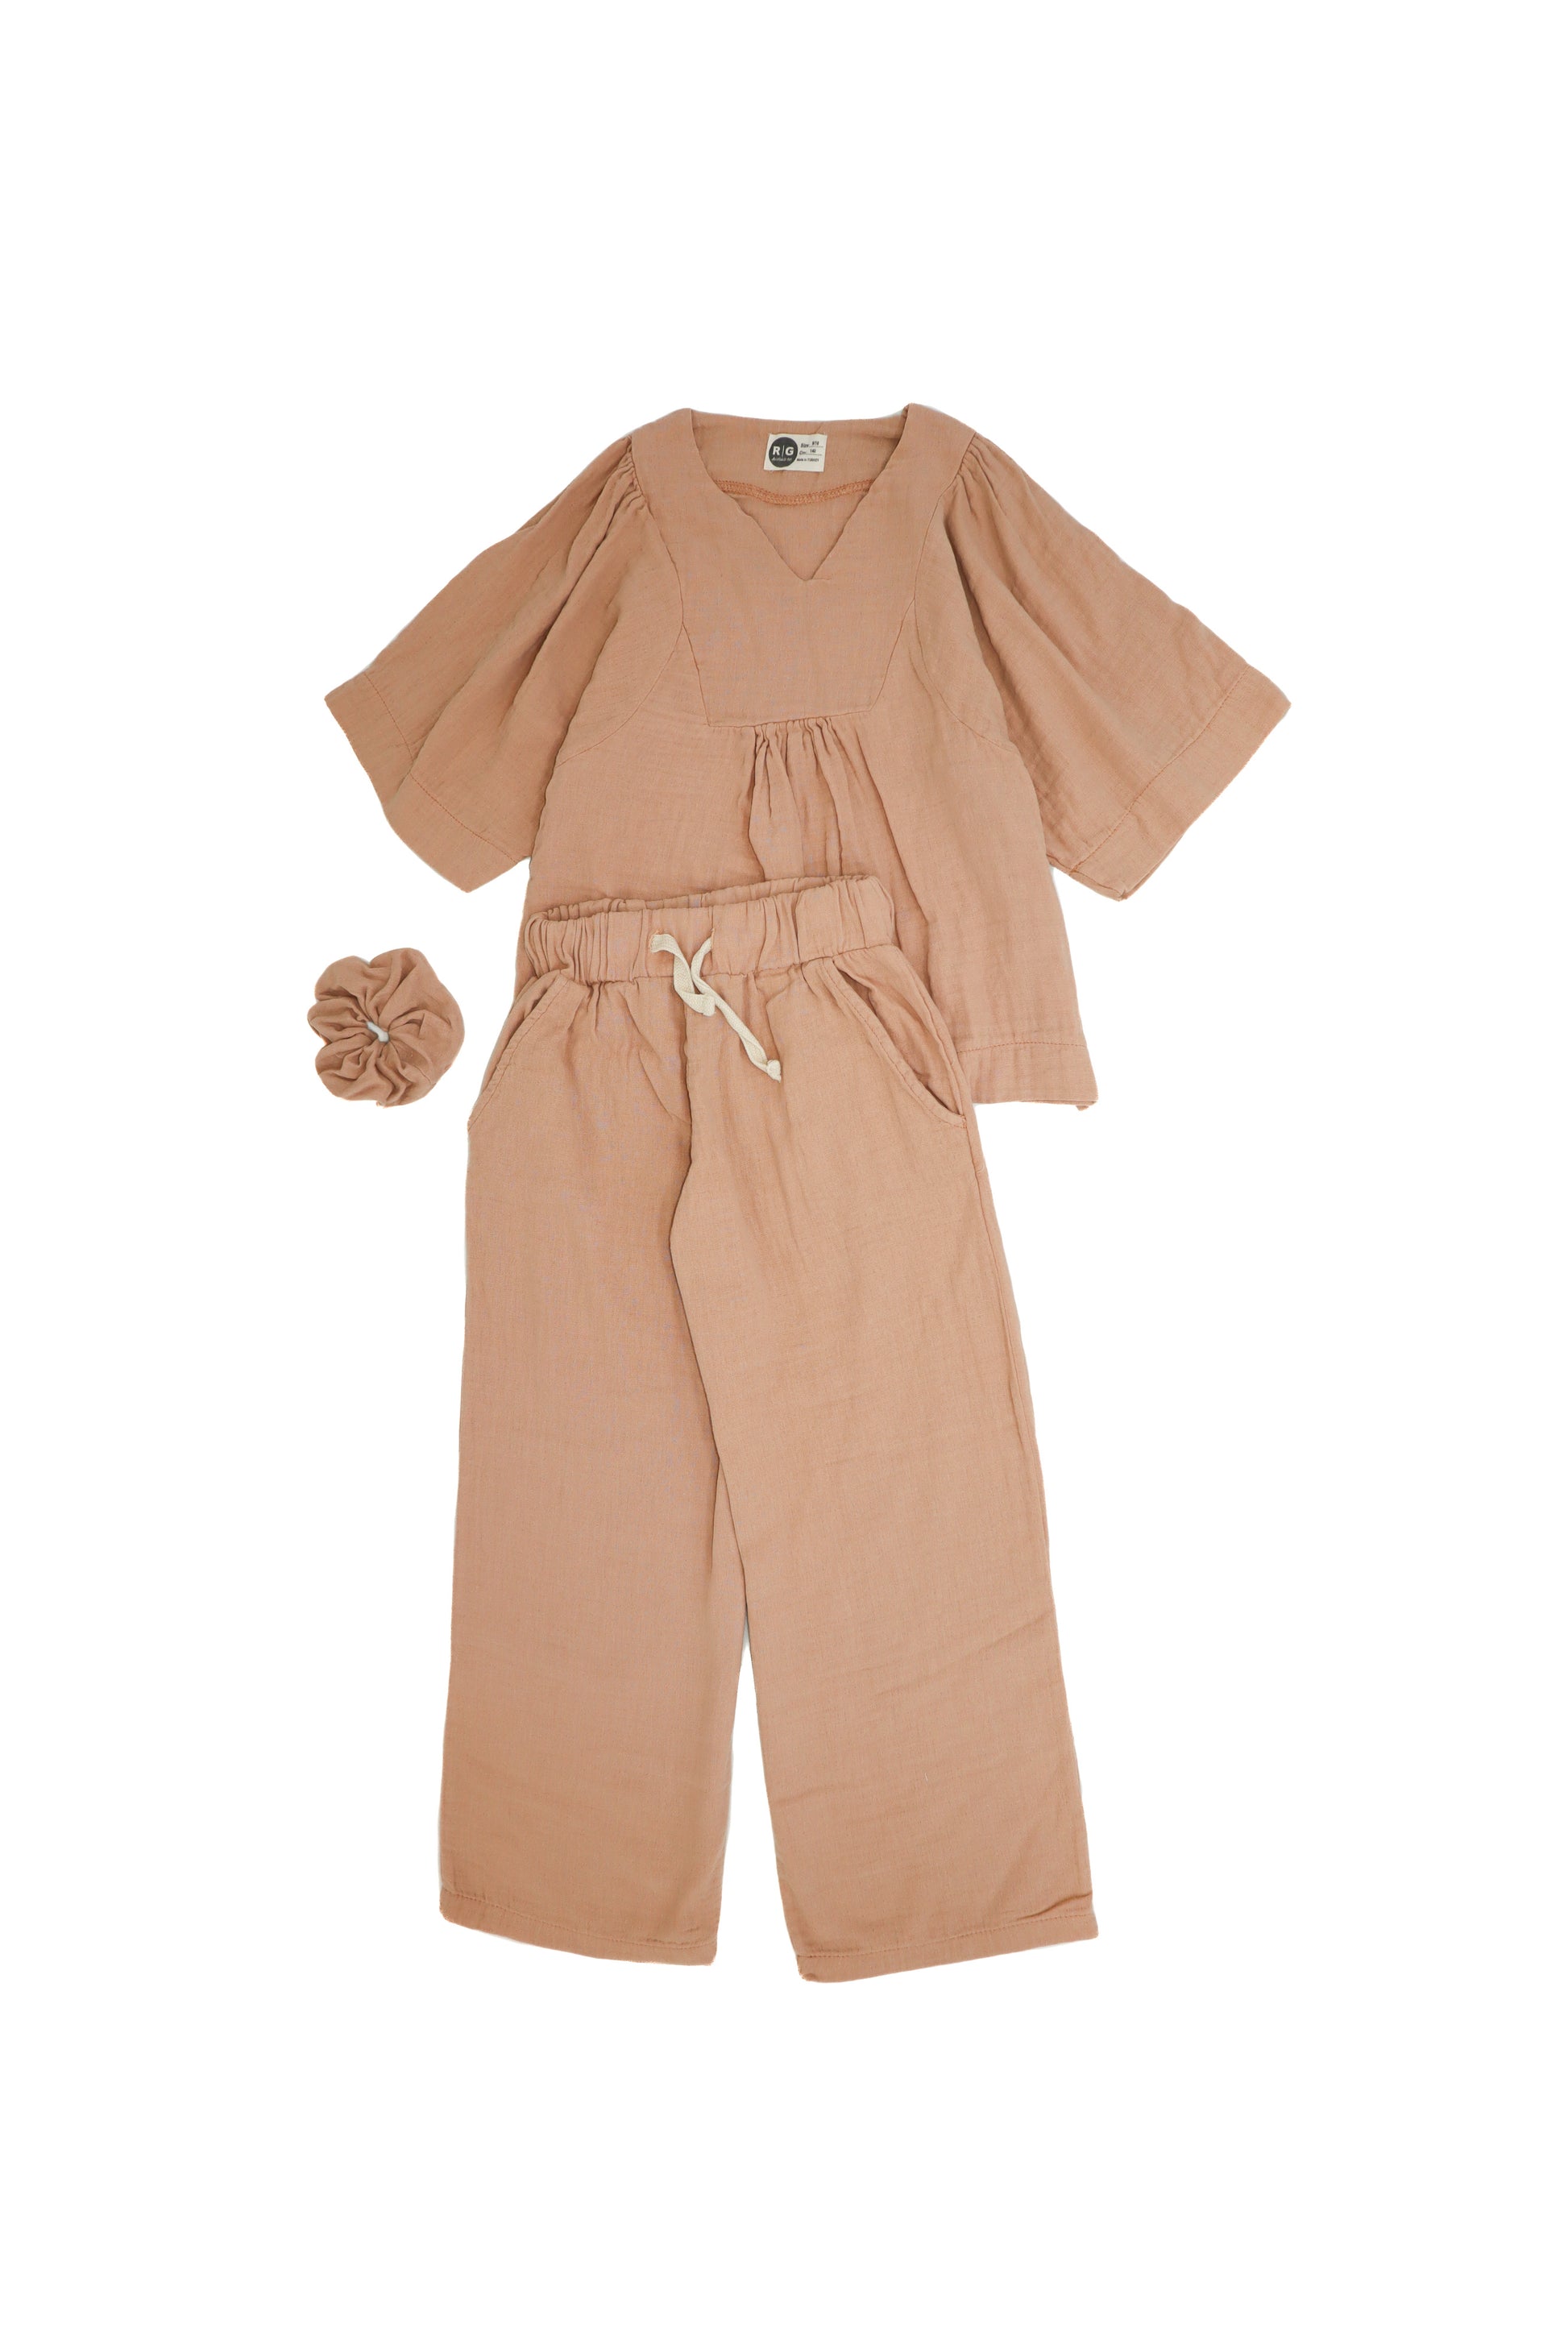 Chıldren's 100% Muslın Pajama Set  Youth 100% Muslın Blouse - Trousersset